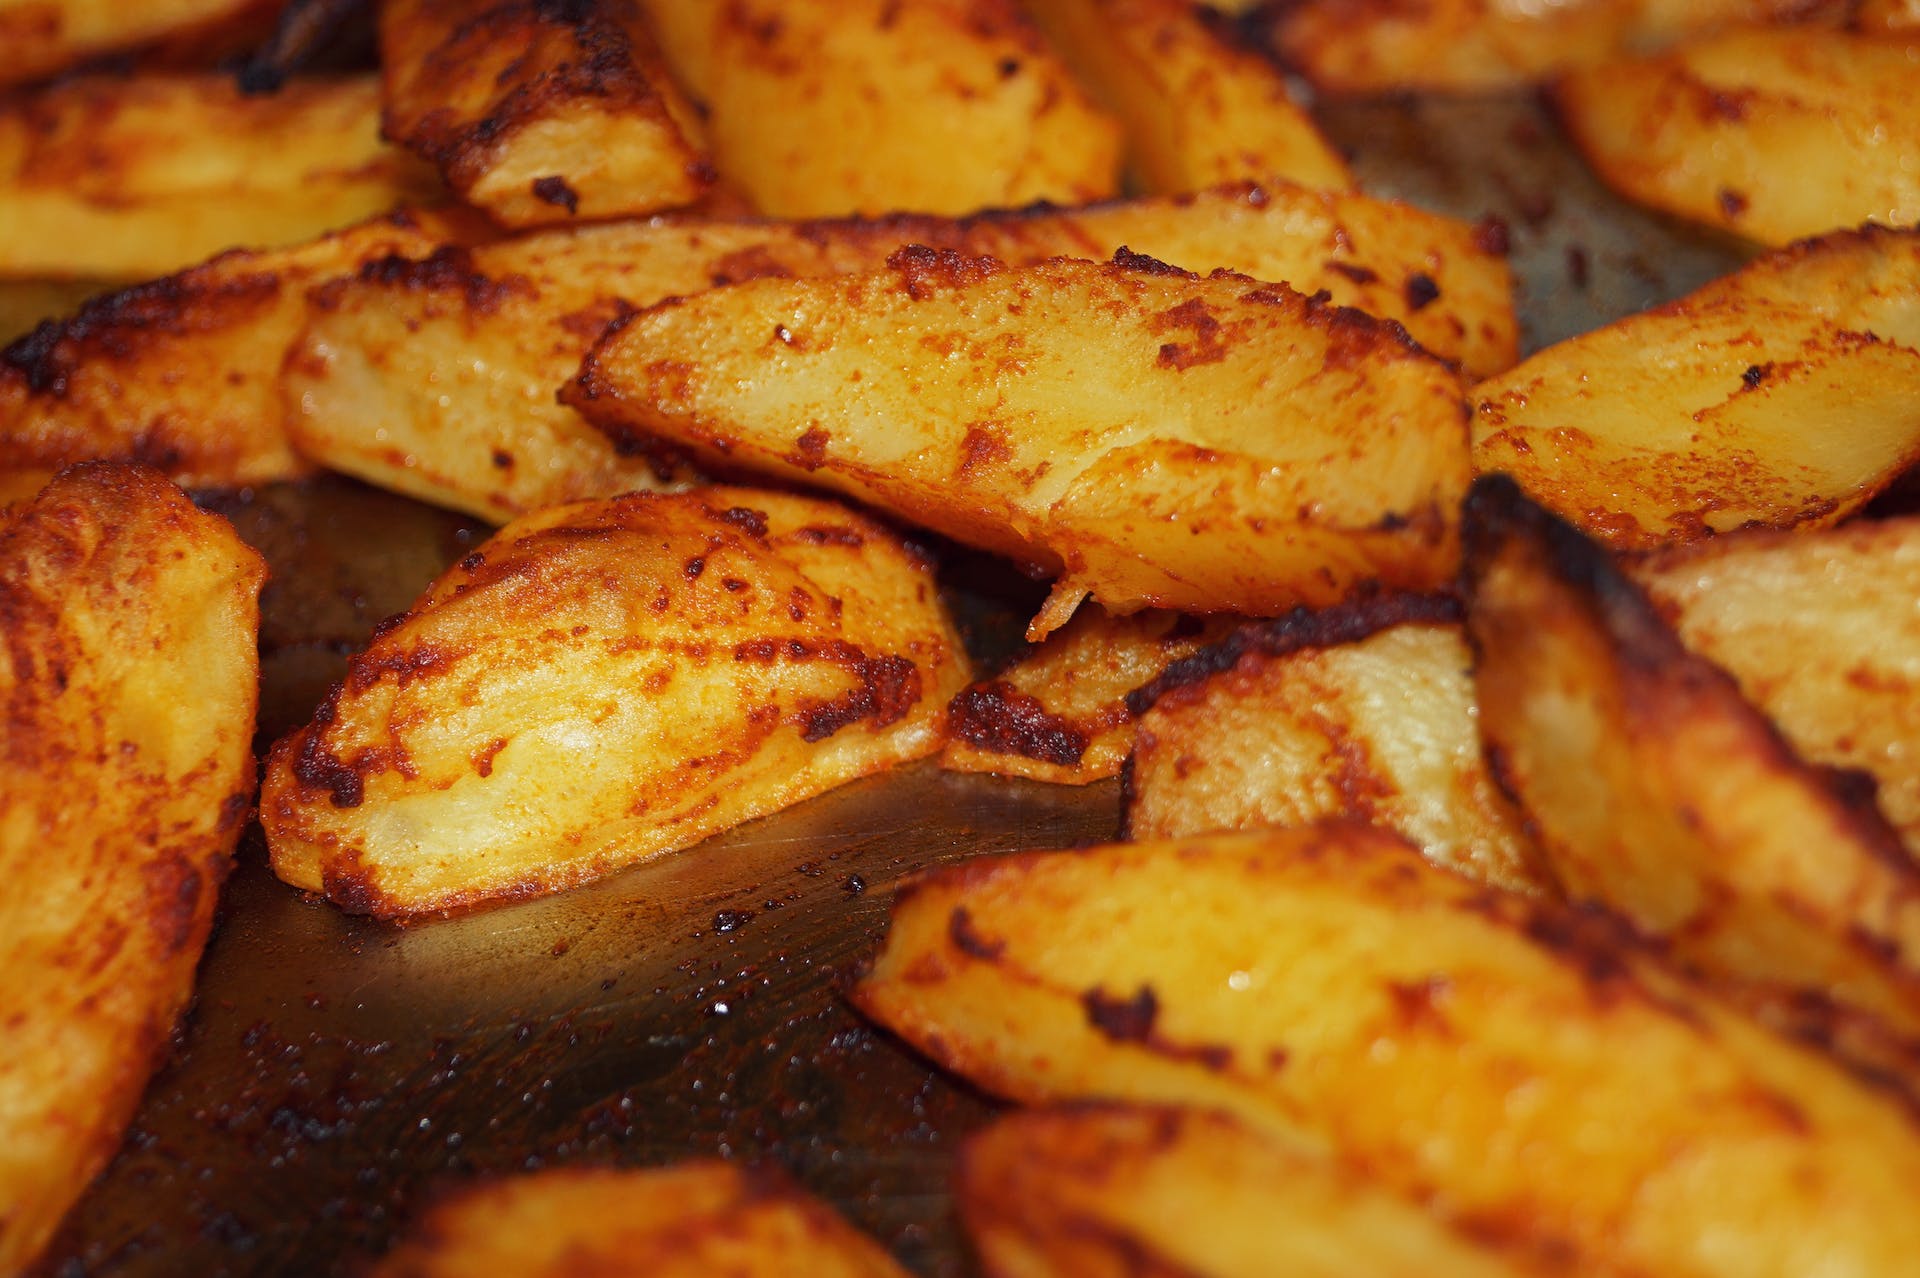 Roasted potatoes | Source: Pexels